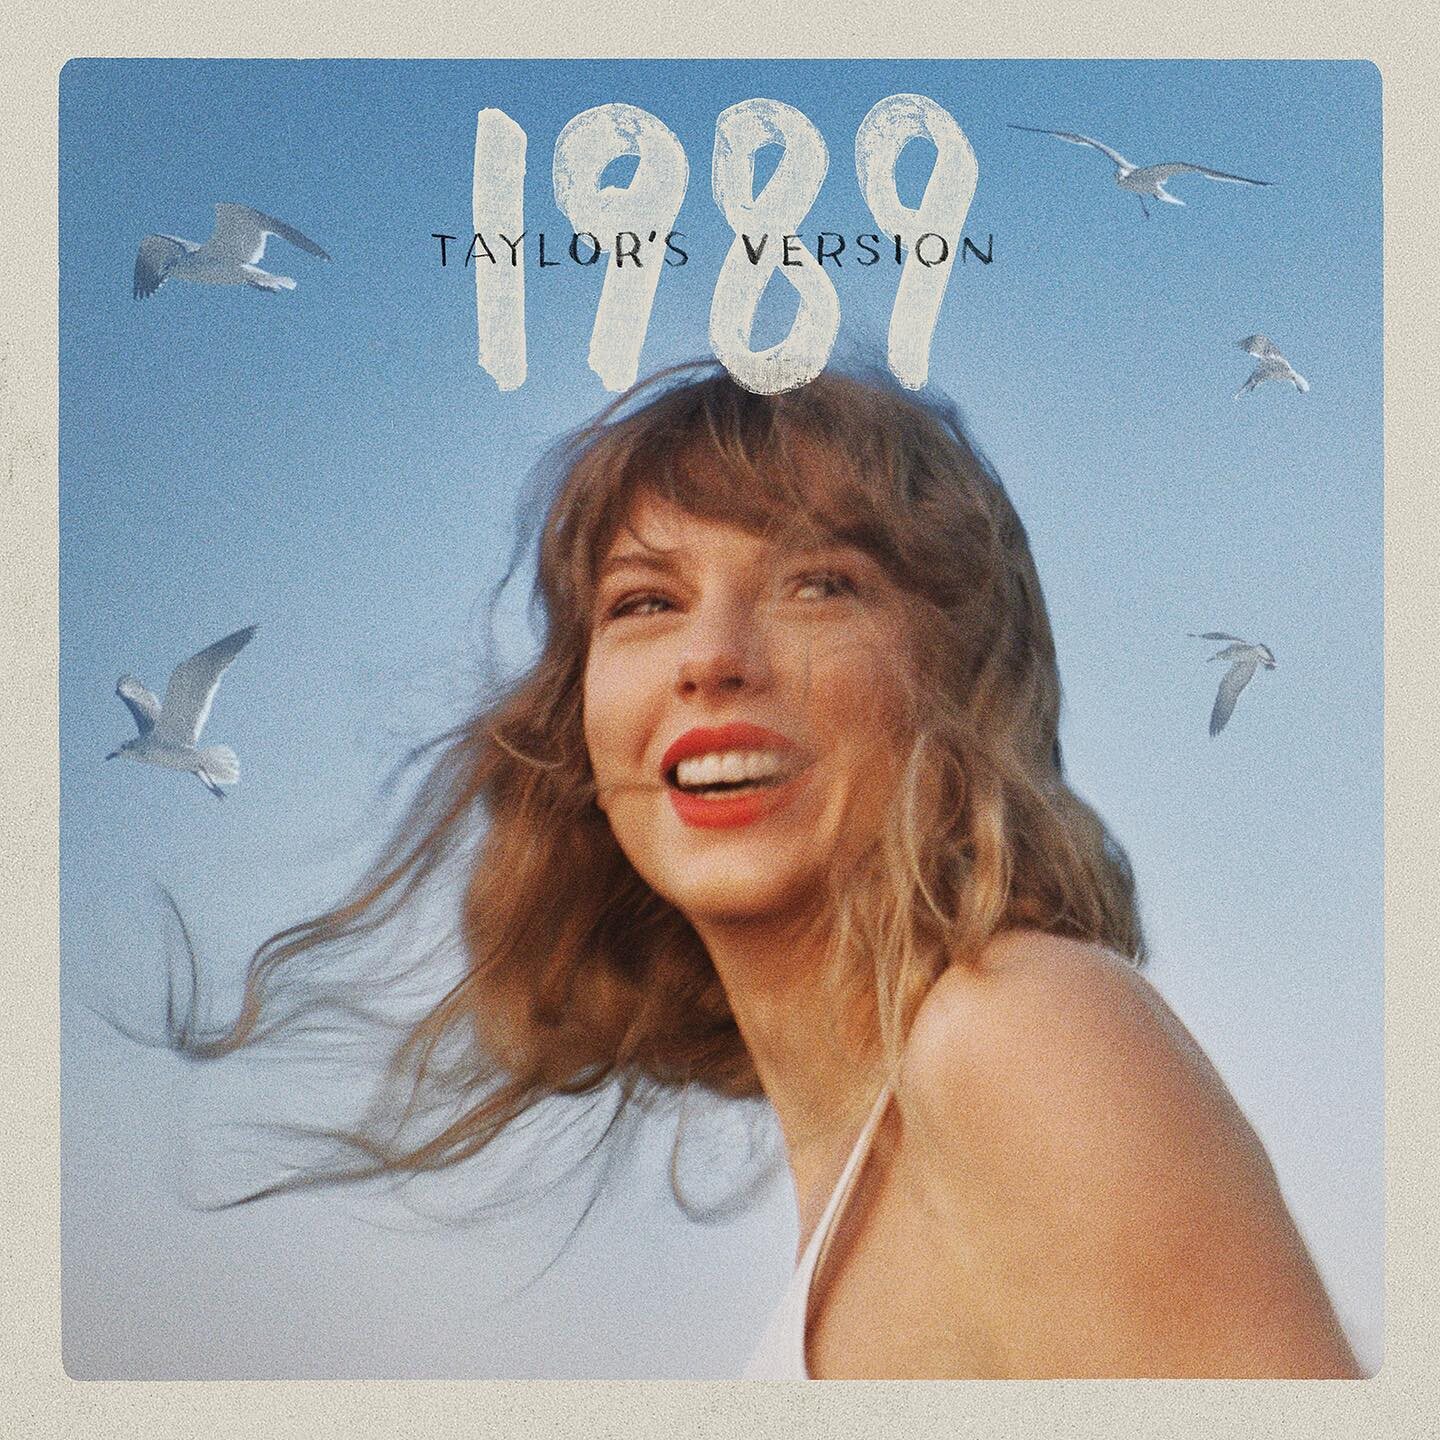 El 27 de octubre llegó '1989 (Taylor's Version') 